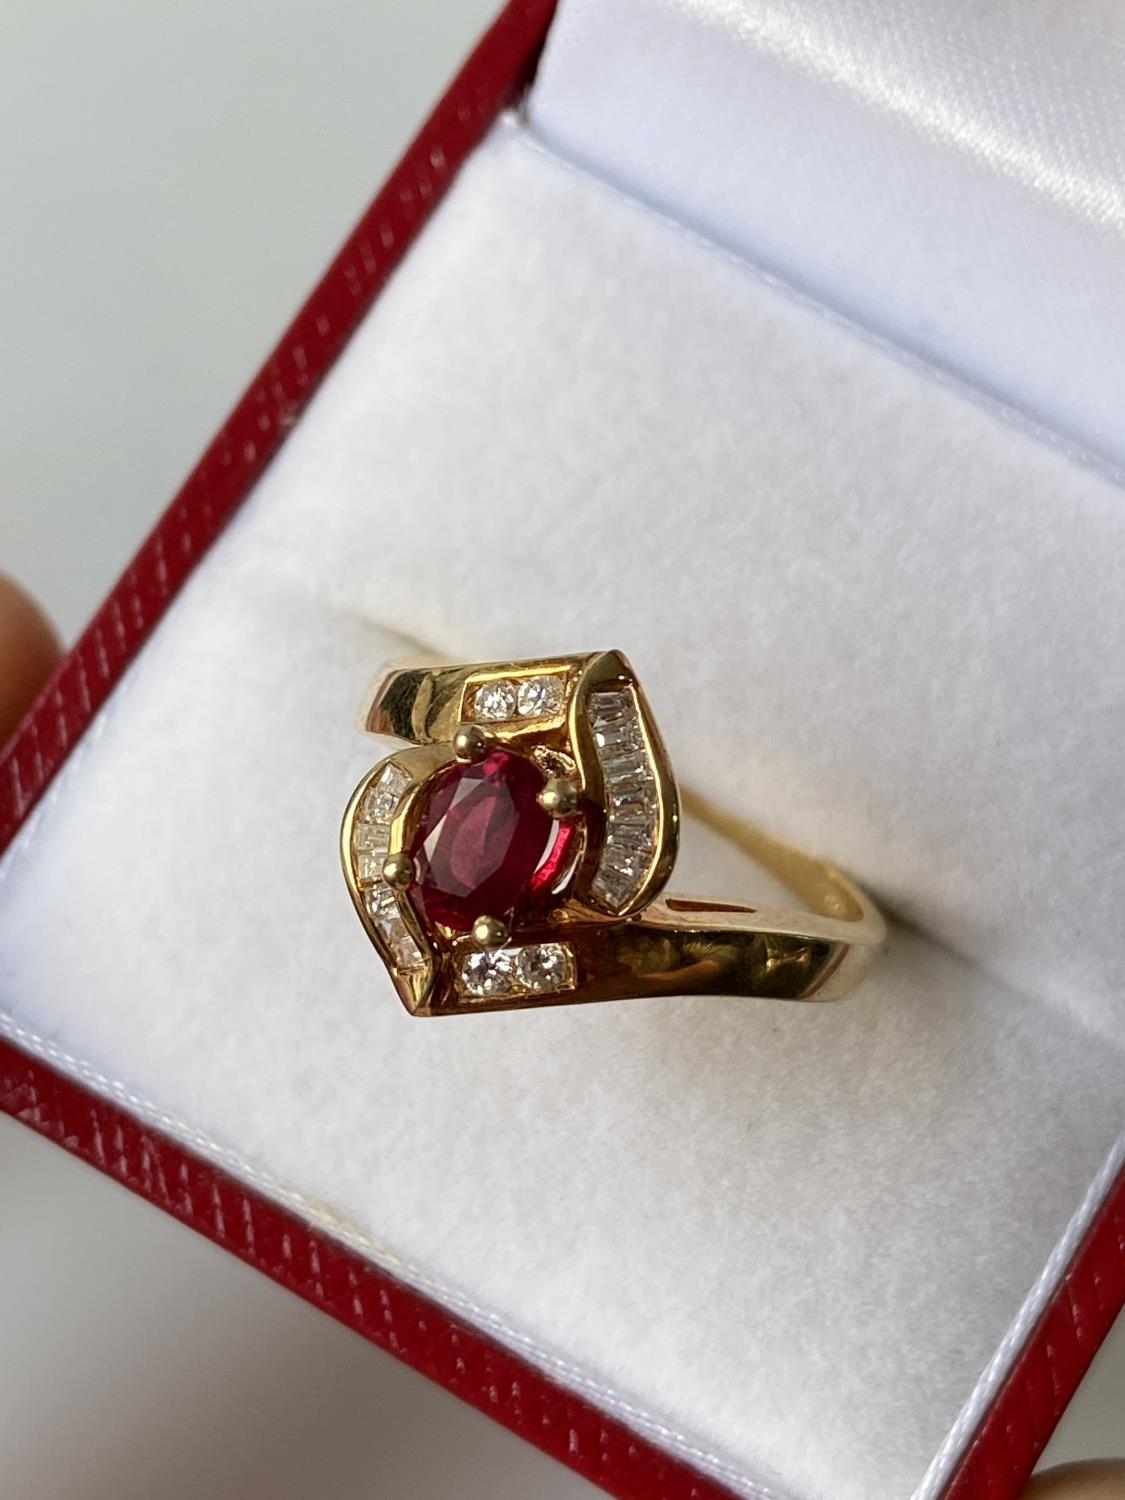 An 18ct gold ladies diamond & ruby set ring [size M] [4.13g]